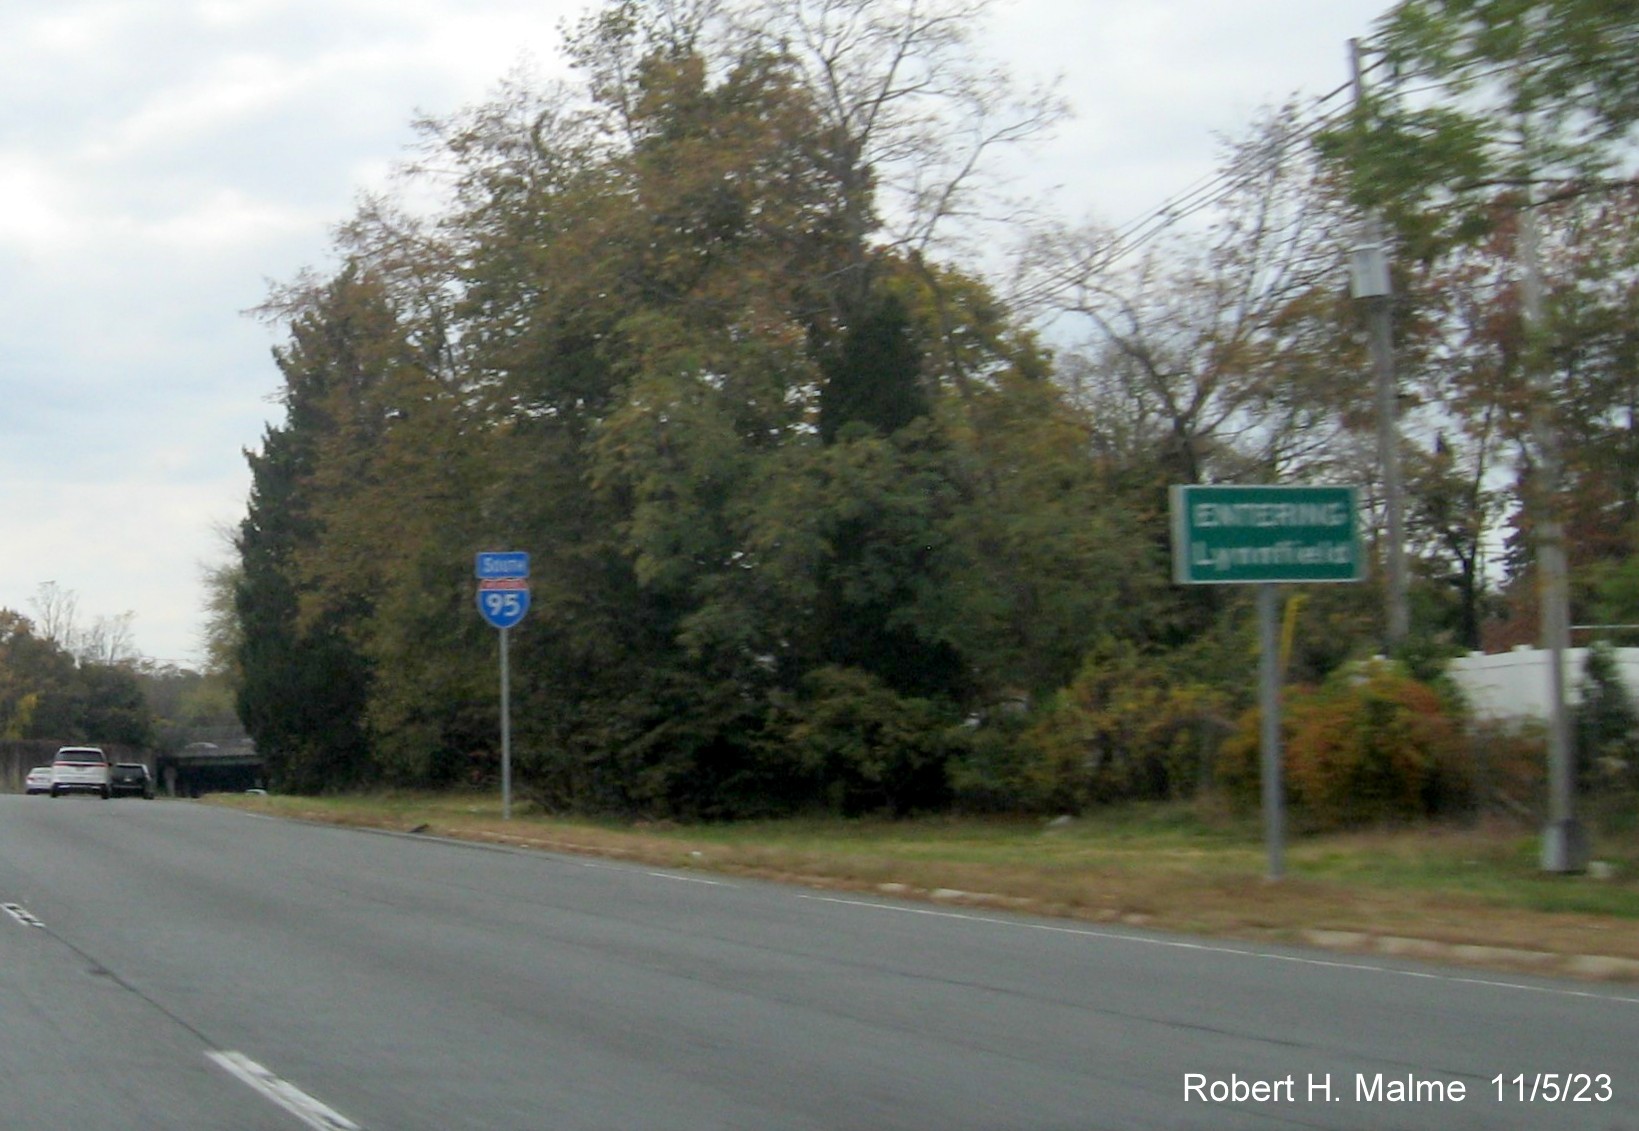 Image of standalong South I-95 reassurance marker after US 1 exit after entering Lynnfield, separate MA 128 reassurance marker around corner.